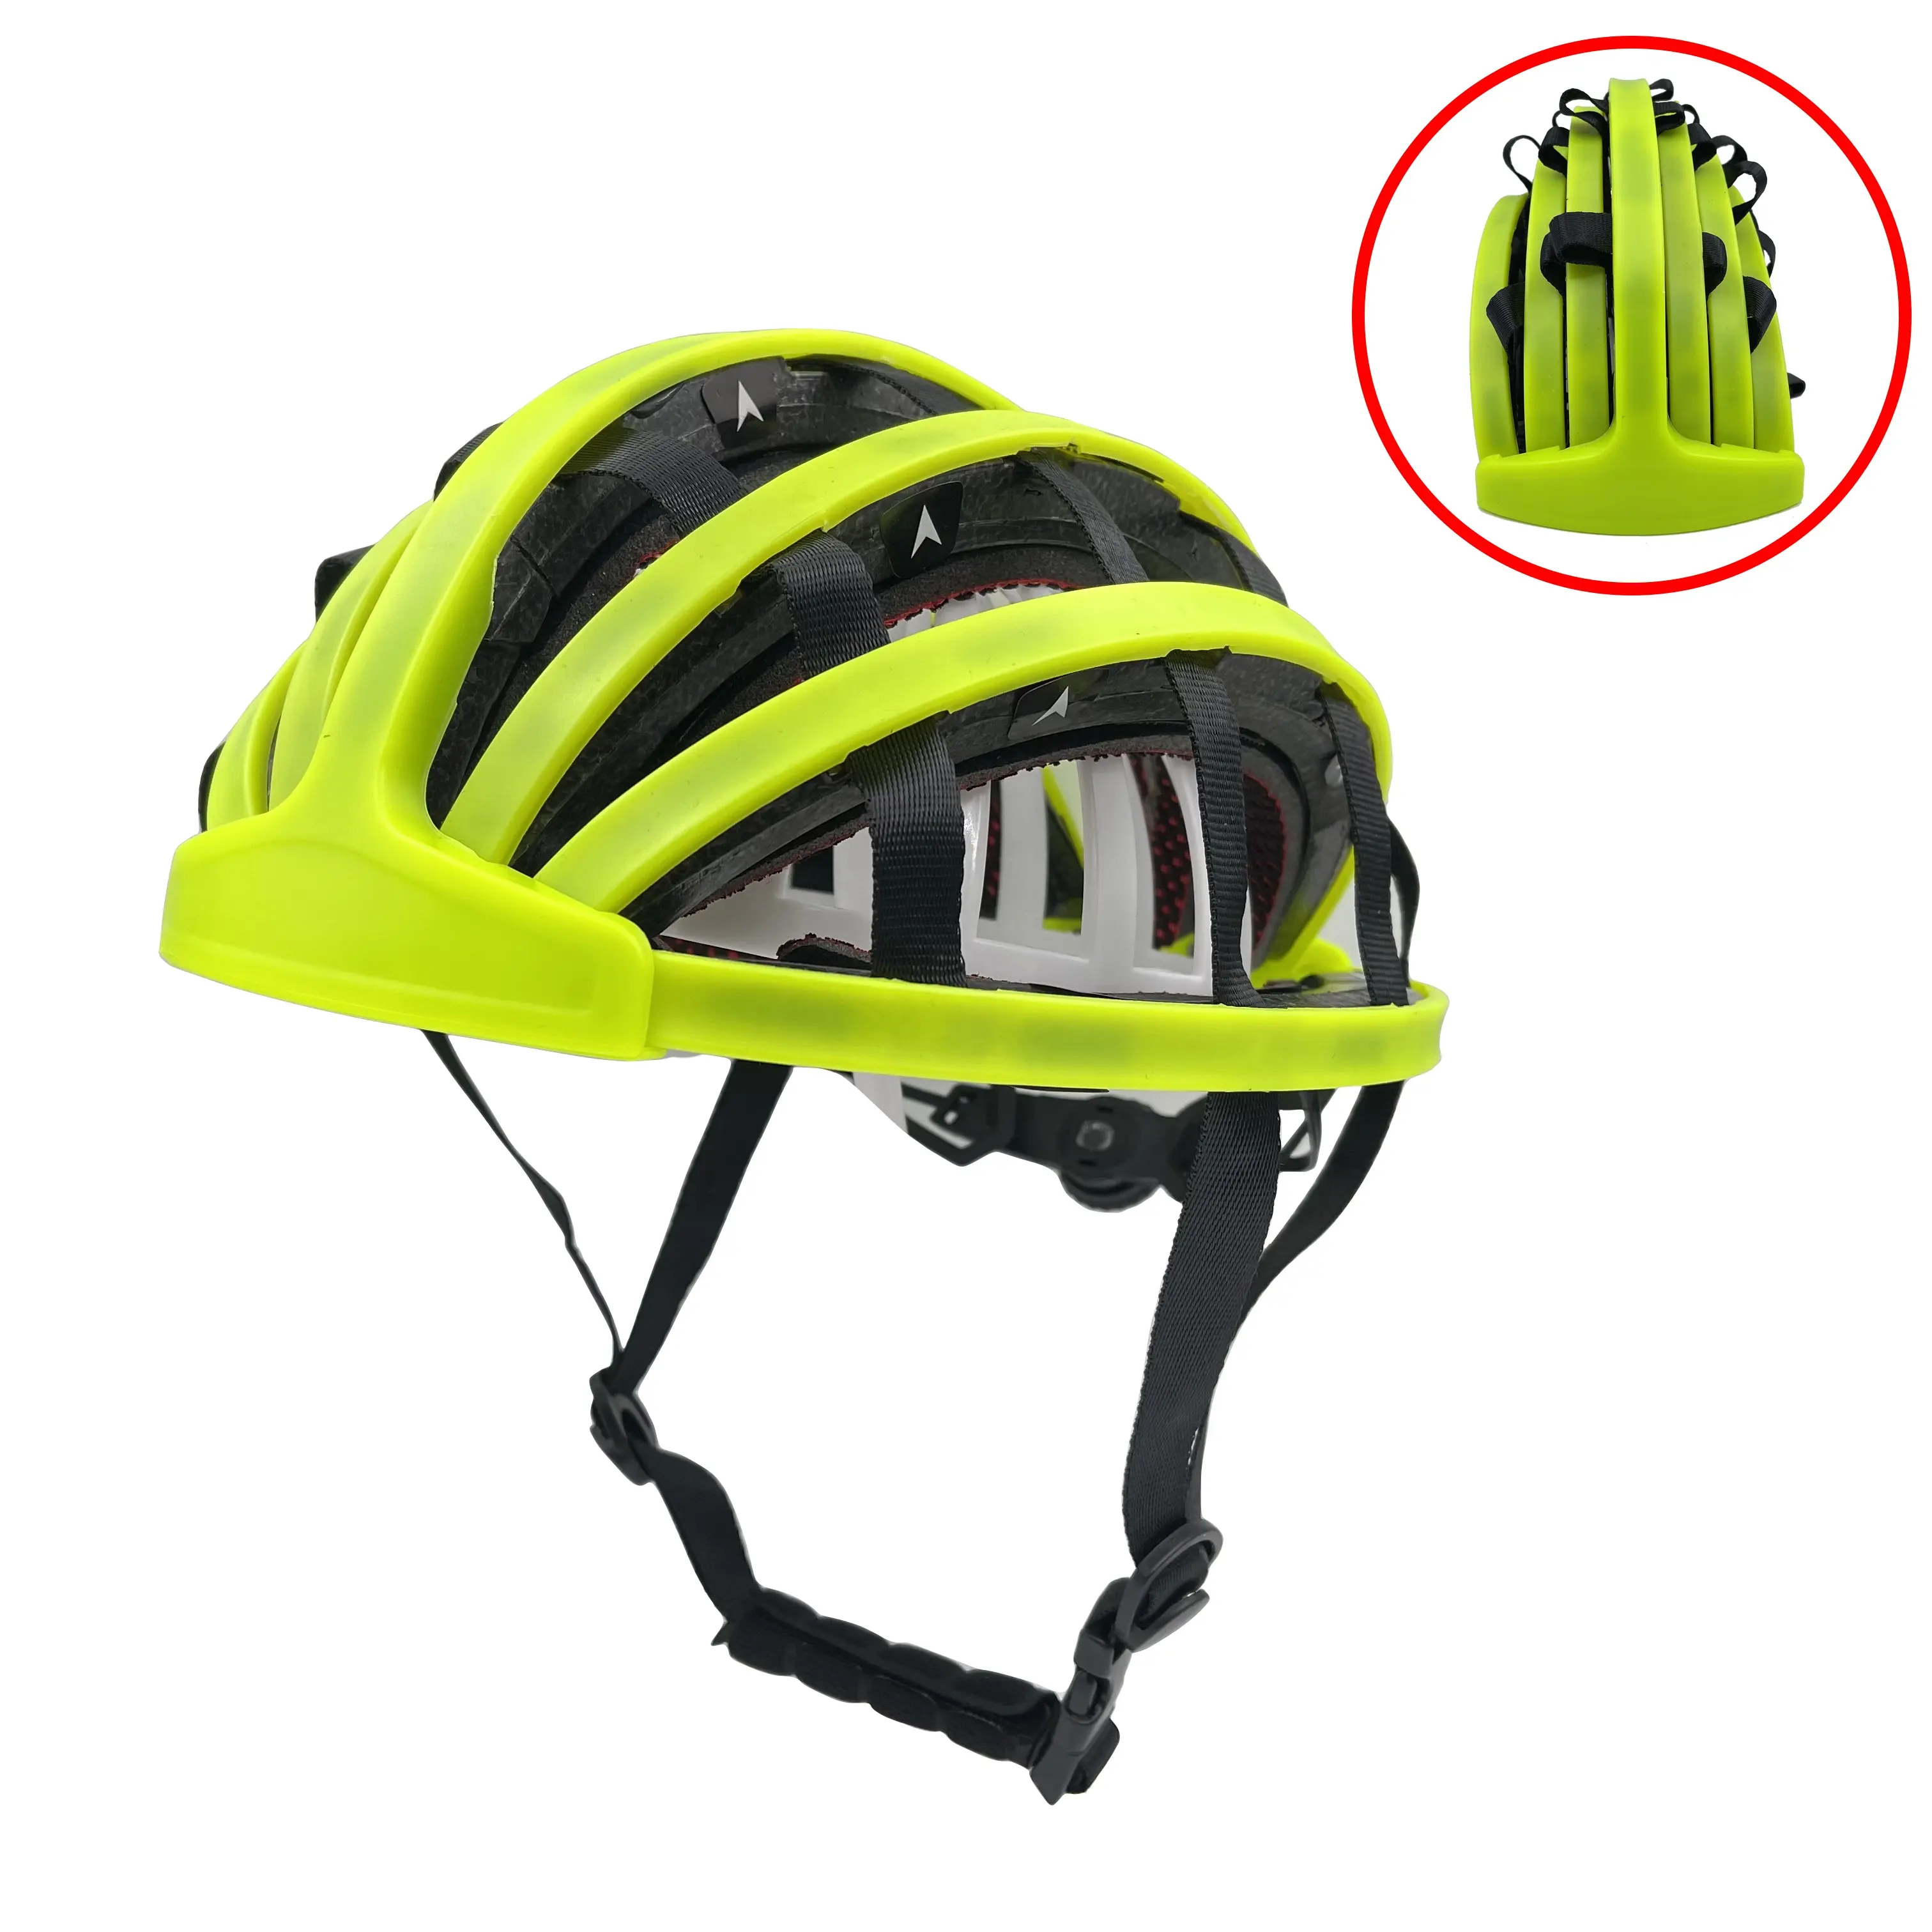 REYGEAK Cycling Helmets Male Female Riding Equipment Sports Protective Gear Folding Mountain Bicycle Helmet